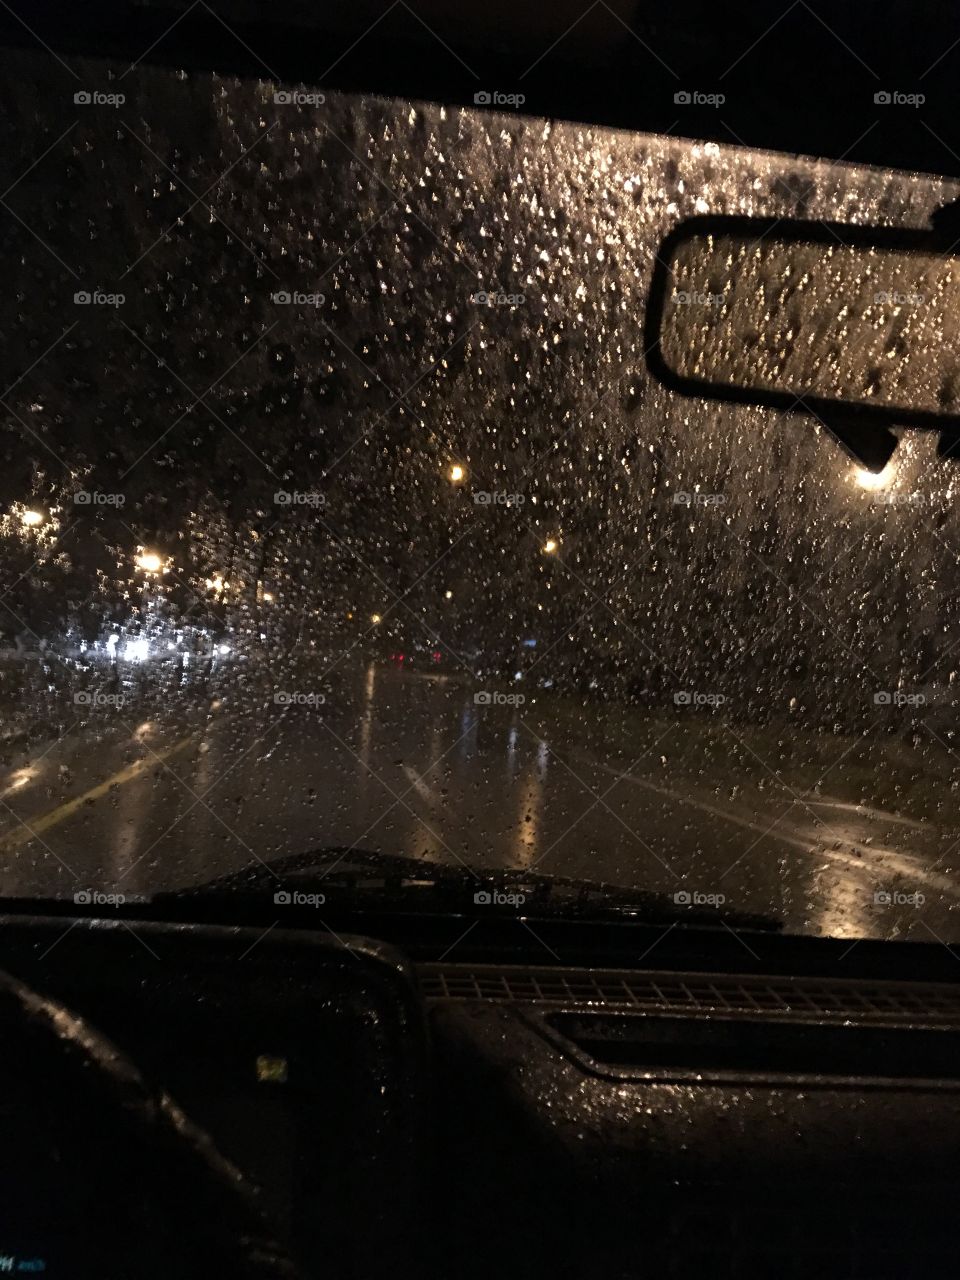 Rain, Street, Car, Dark, Abstract